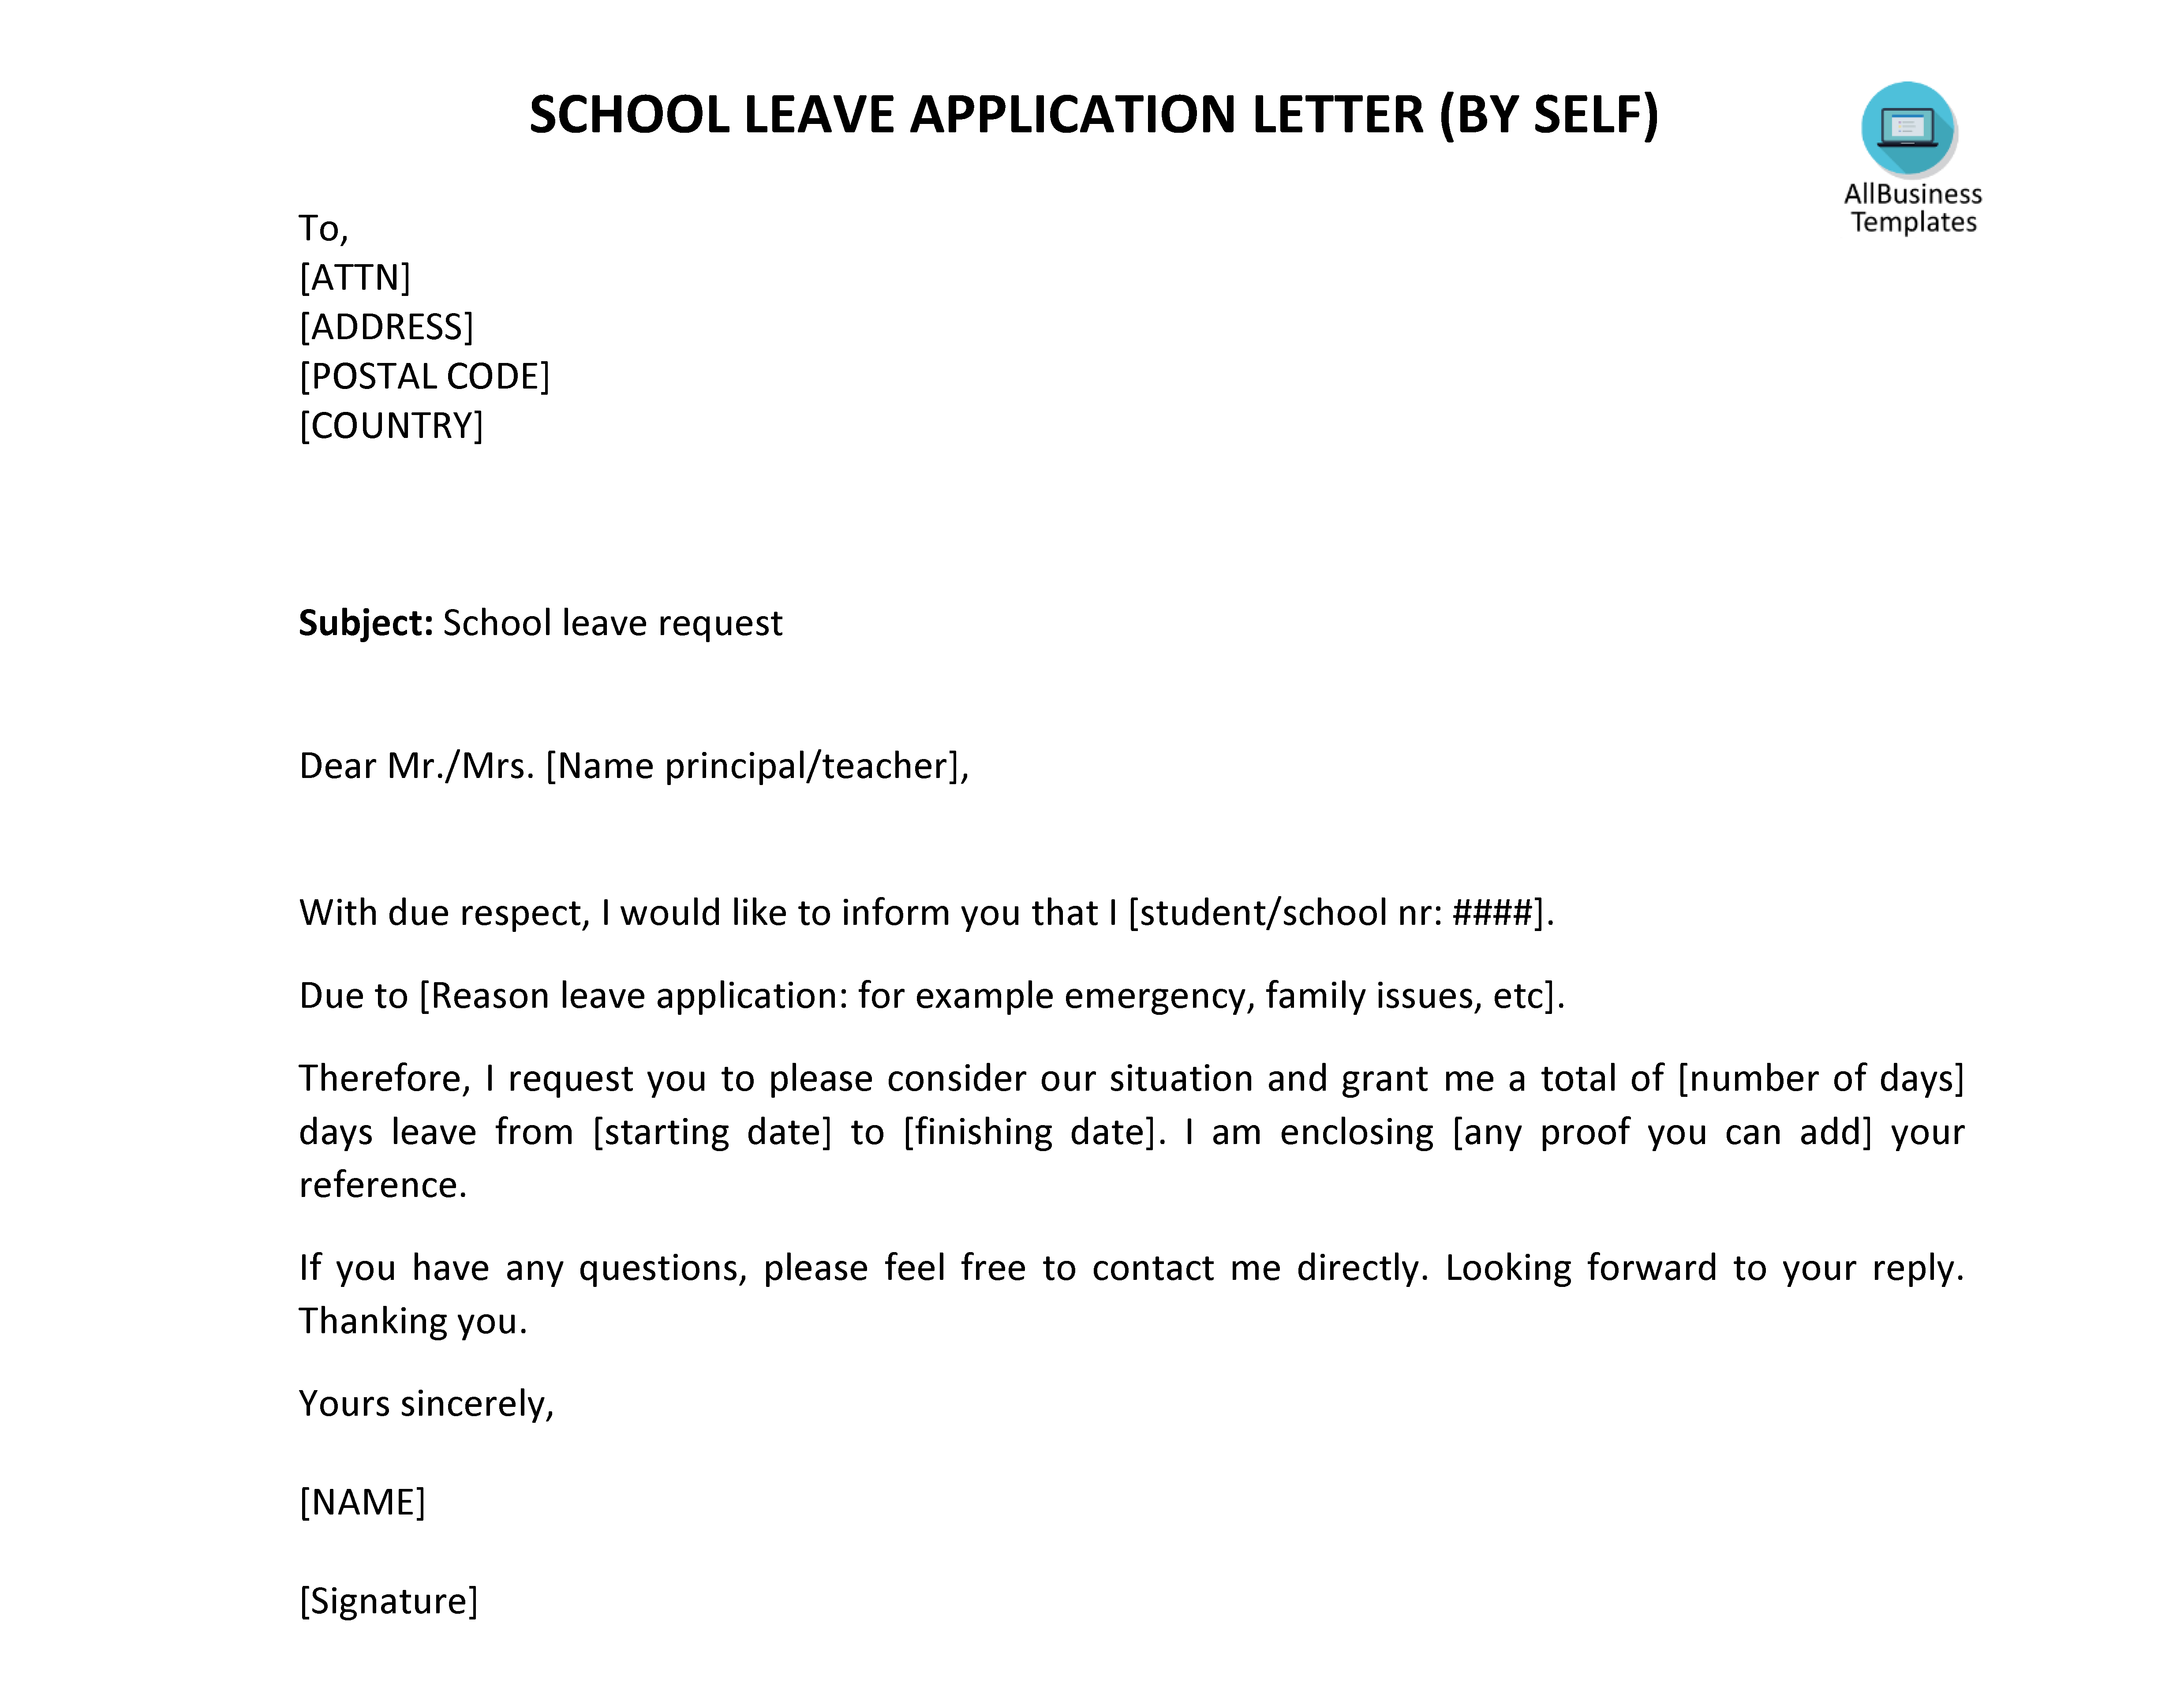 school leave letter by self modèles